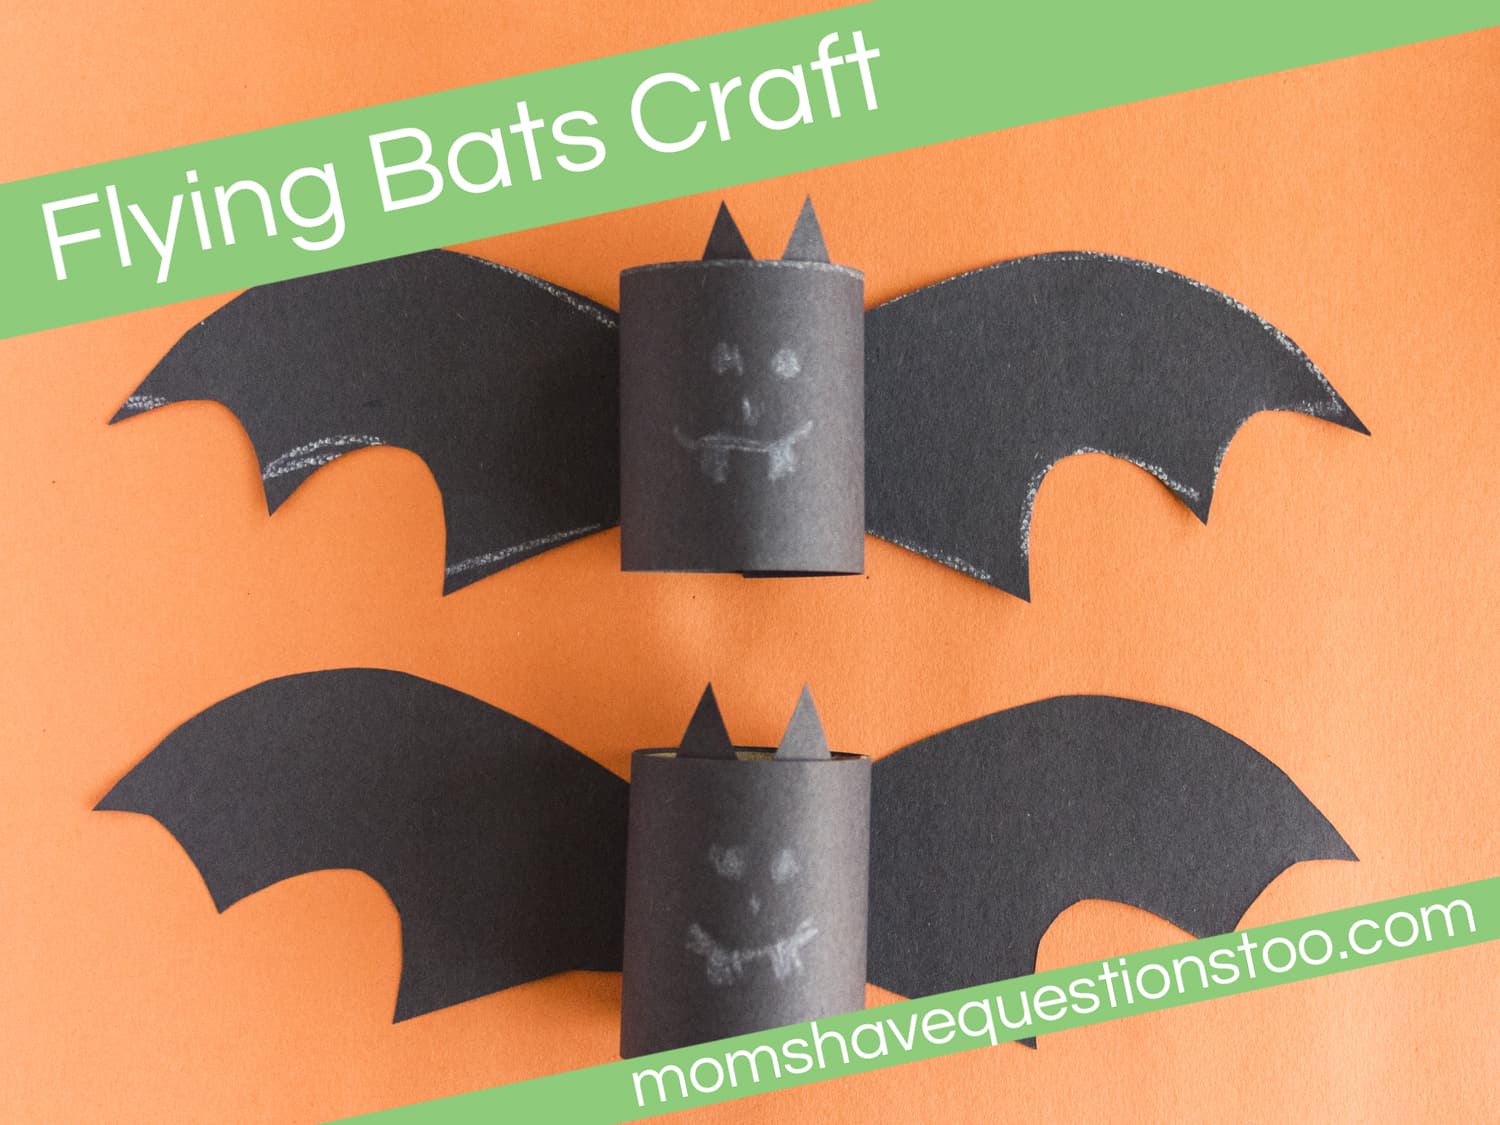 Simple flying bats craft